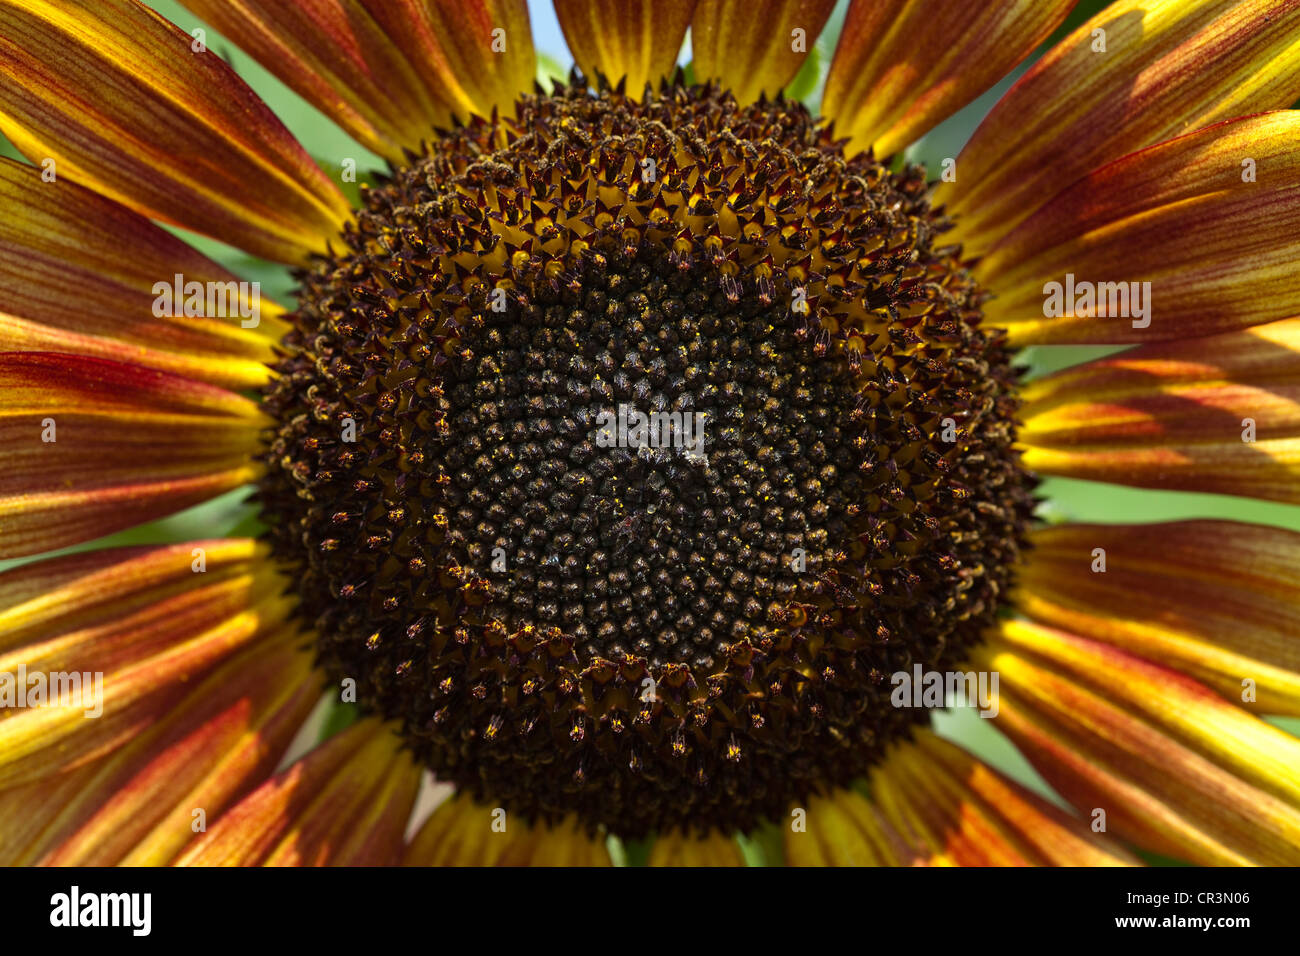 France, Dordogne, Perigord, capitulum of sunflower (Helianthus annuus) Stock Photo